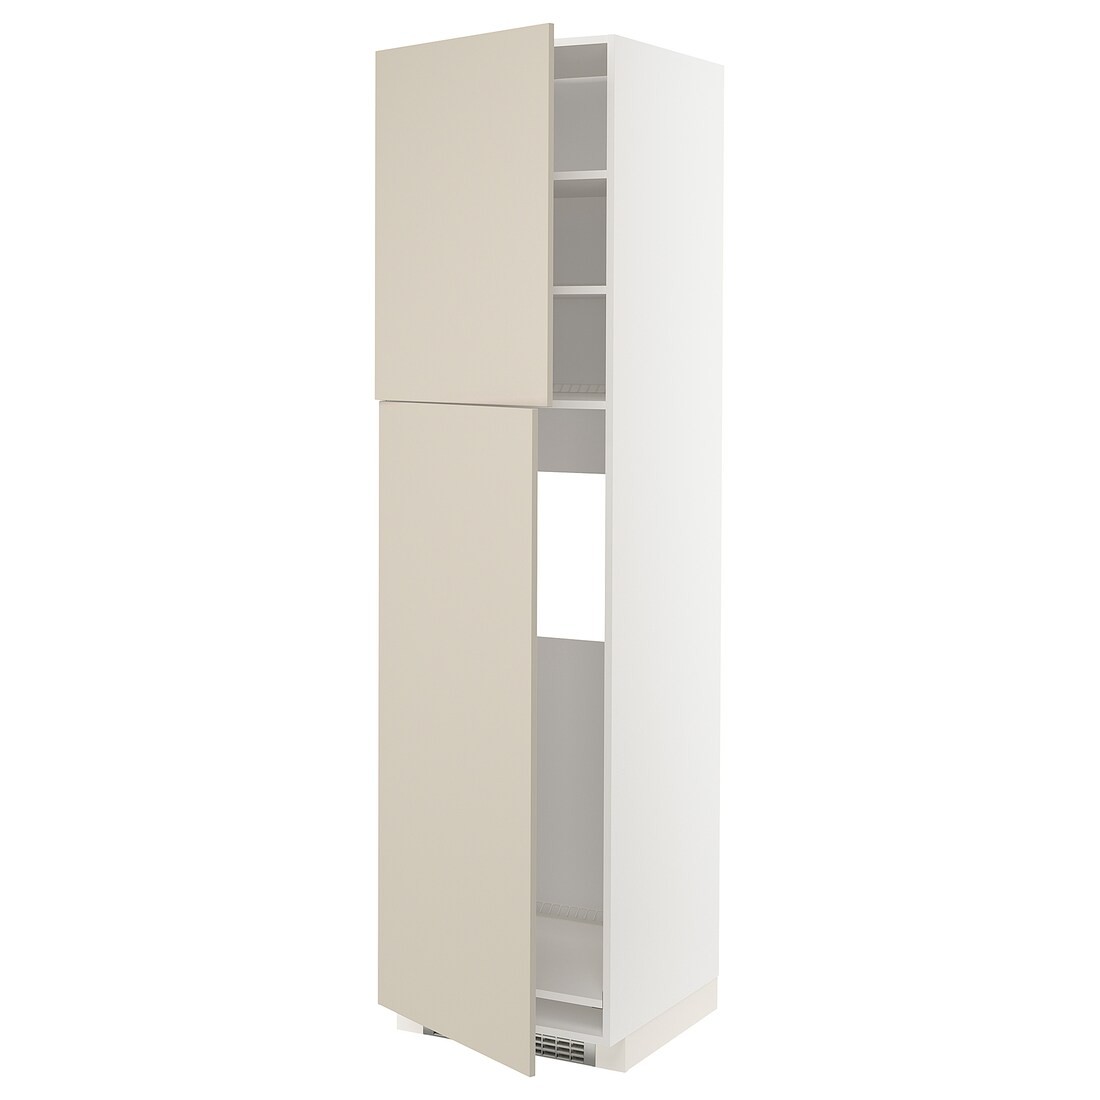 IKEA METOD МЕТОД Высокий шкаф для холодильника, белый / Havstorp бежевый, 60x60x220 см 49458813 | 494.588.13